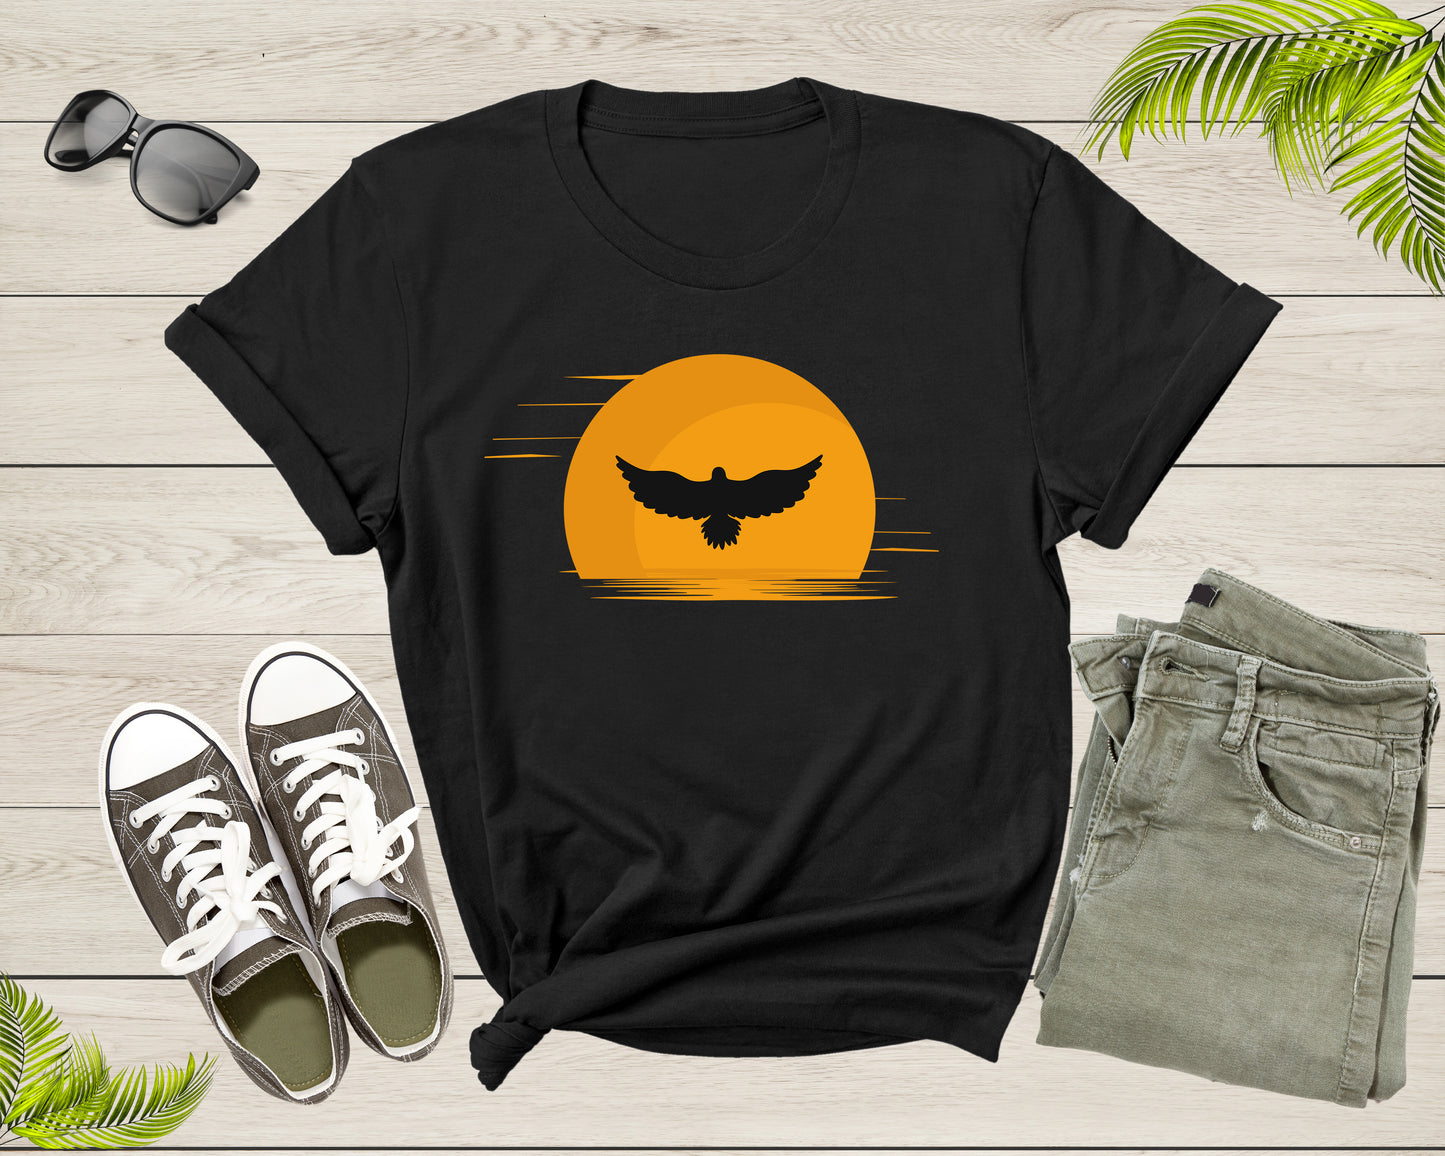 Cute Flying Eagle Bird Animal at Sunset for Men Women Kids T-Shirt Soaring American Eagle Gift T Shirt for Men Women Kids Boys Girls Tshirt